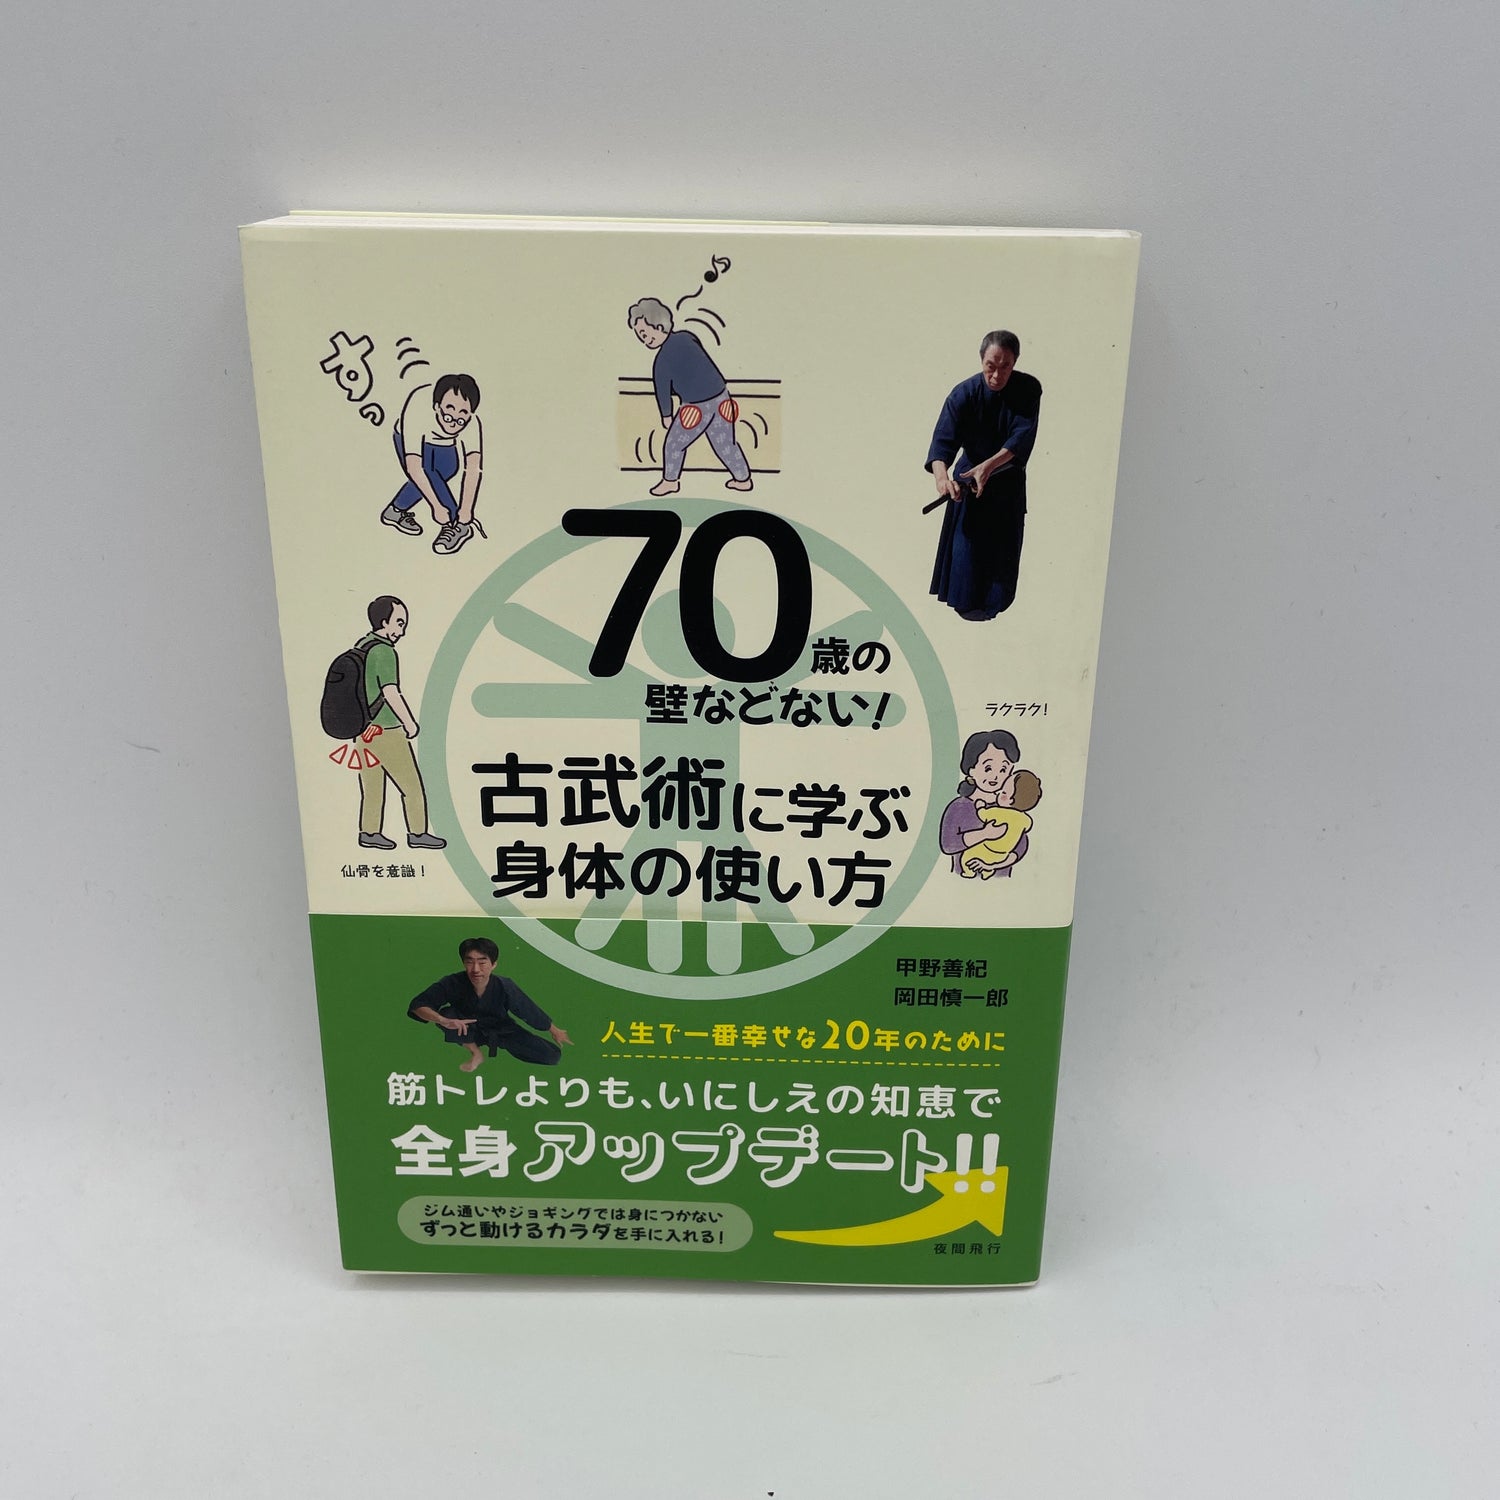 70 Years Old is no Limit! Learn Effective Movement from Kobujutsu Book by Yoshinori Kono